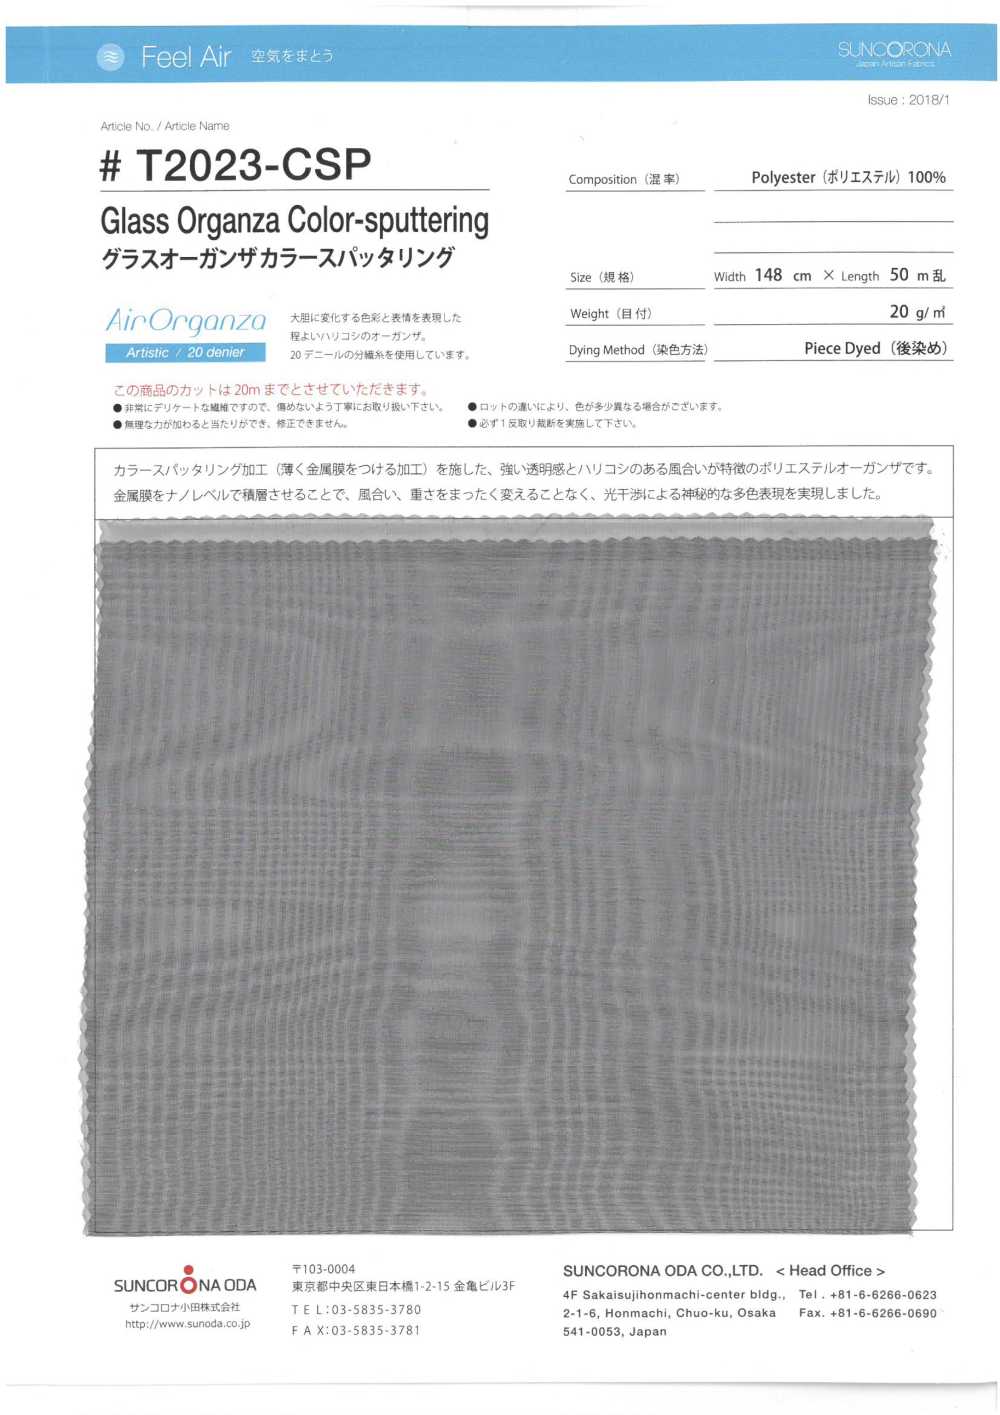 T2023-CSP Glas-Organza-Farbsputtern[Textilgewebe] Suncorona Oda